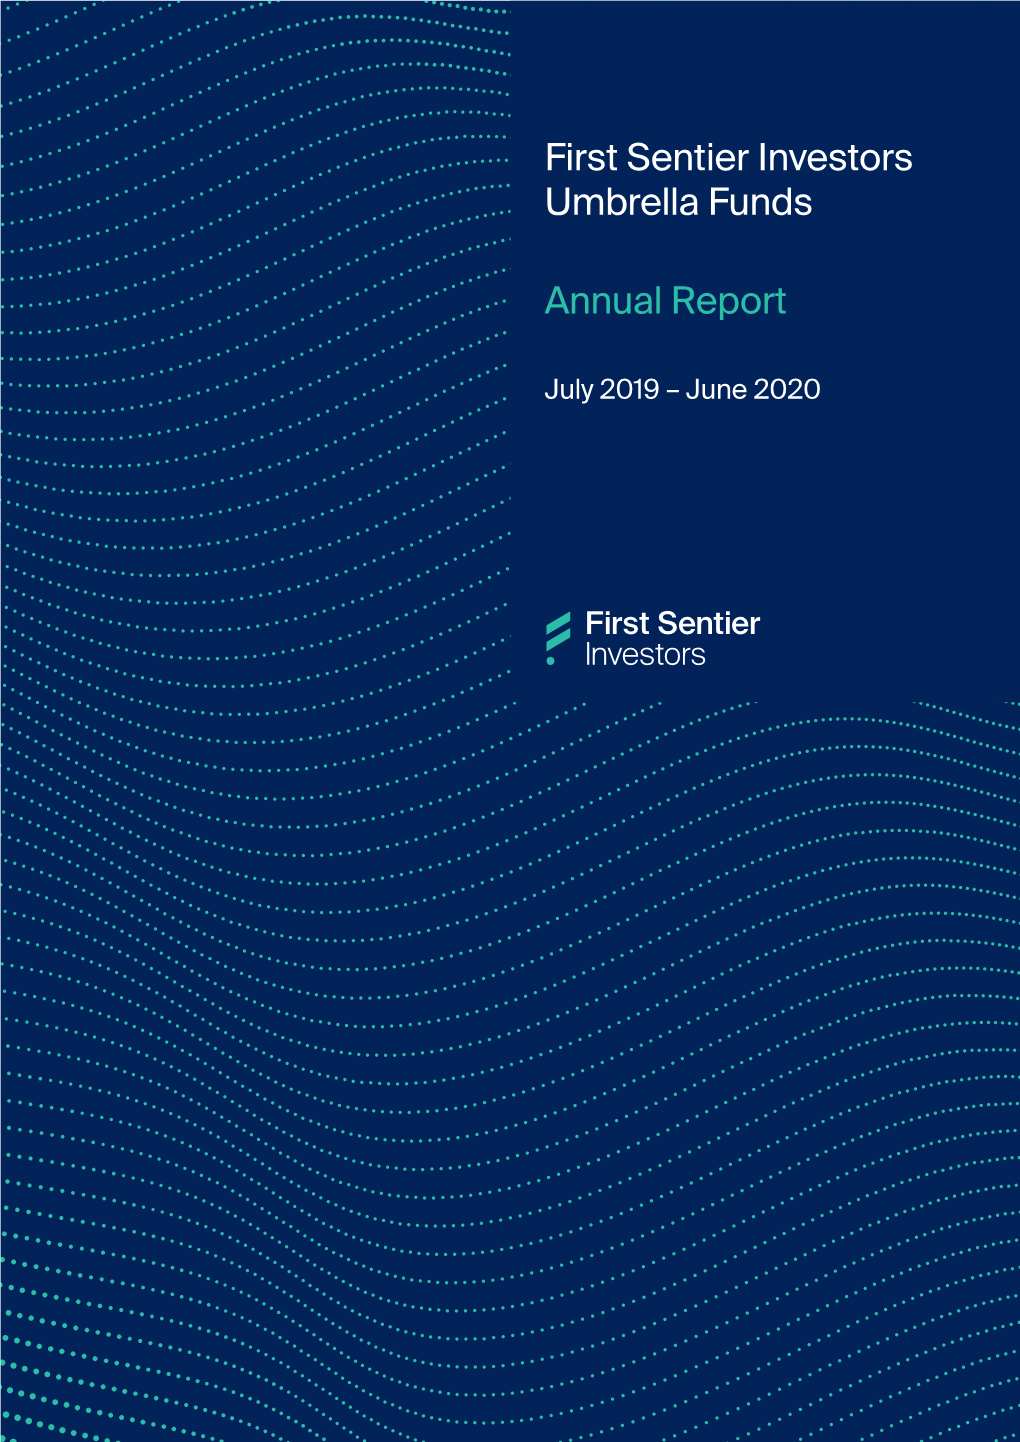 First Sentier Investors Umbrella Funds Annual Report